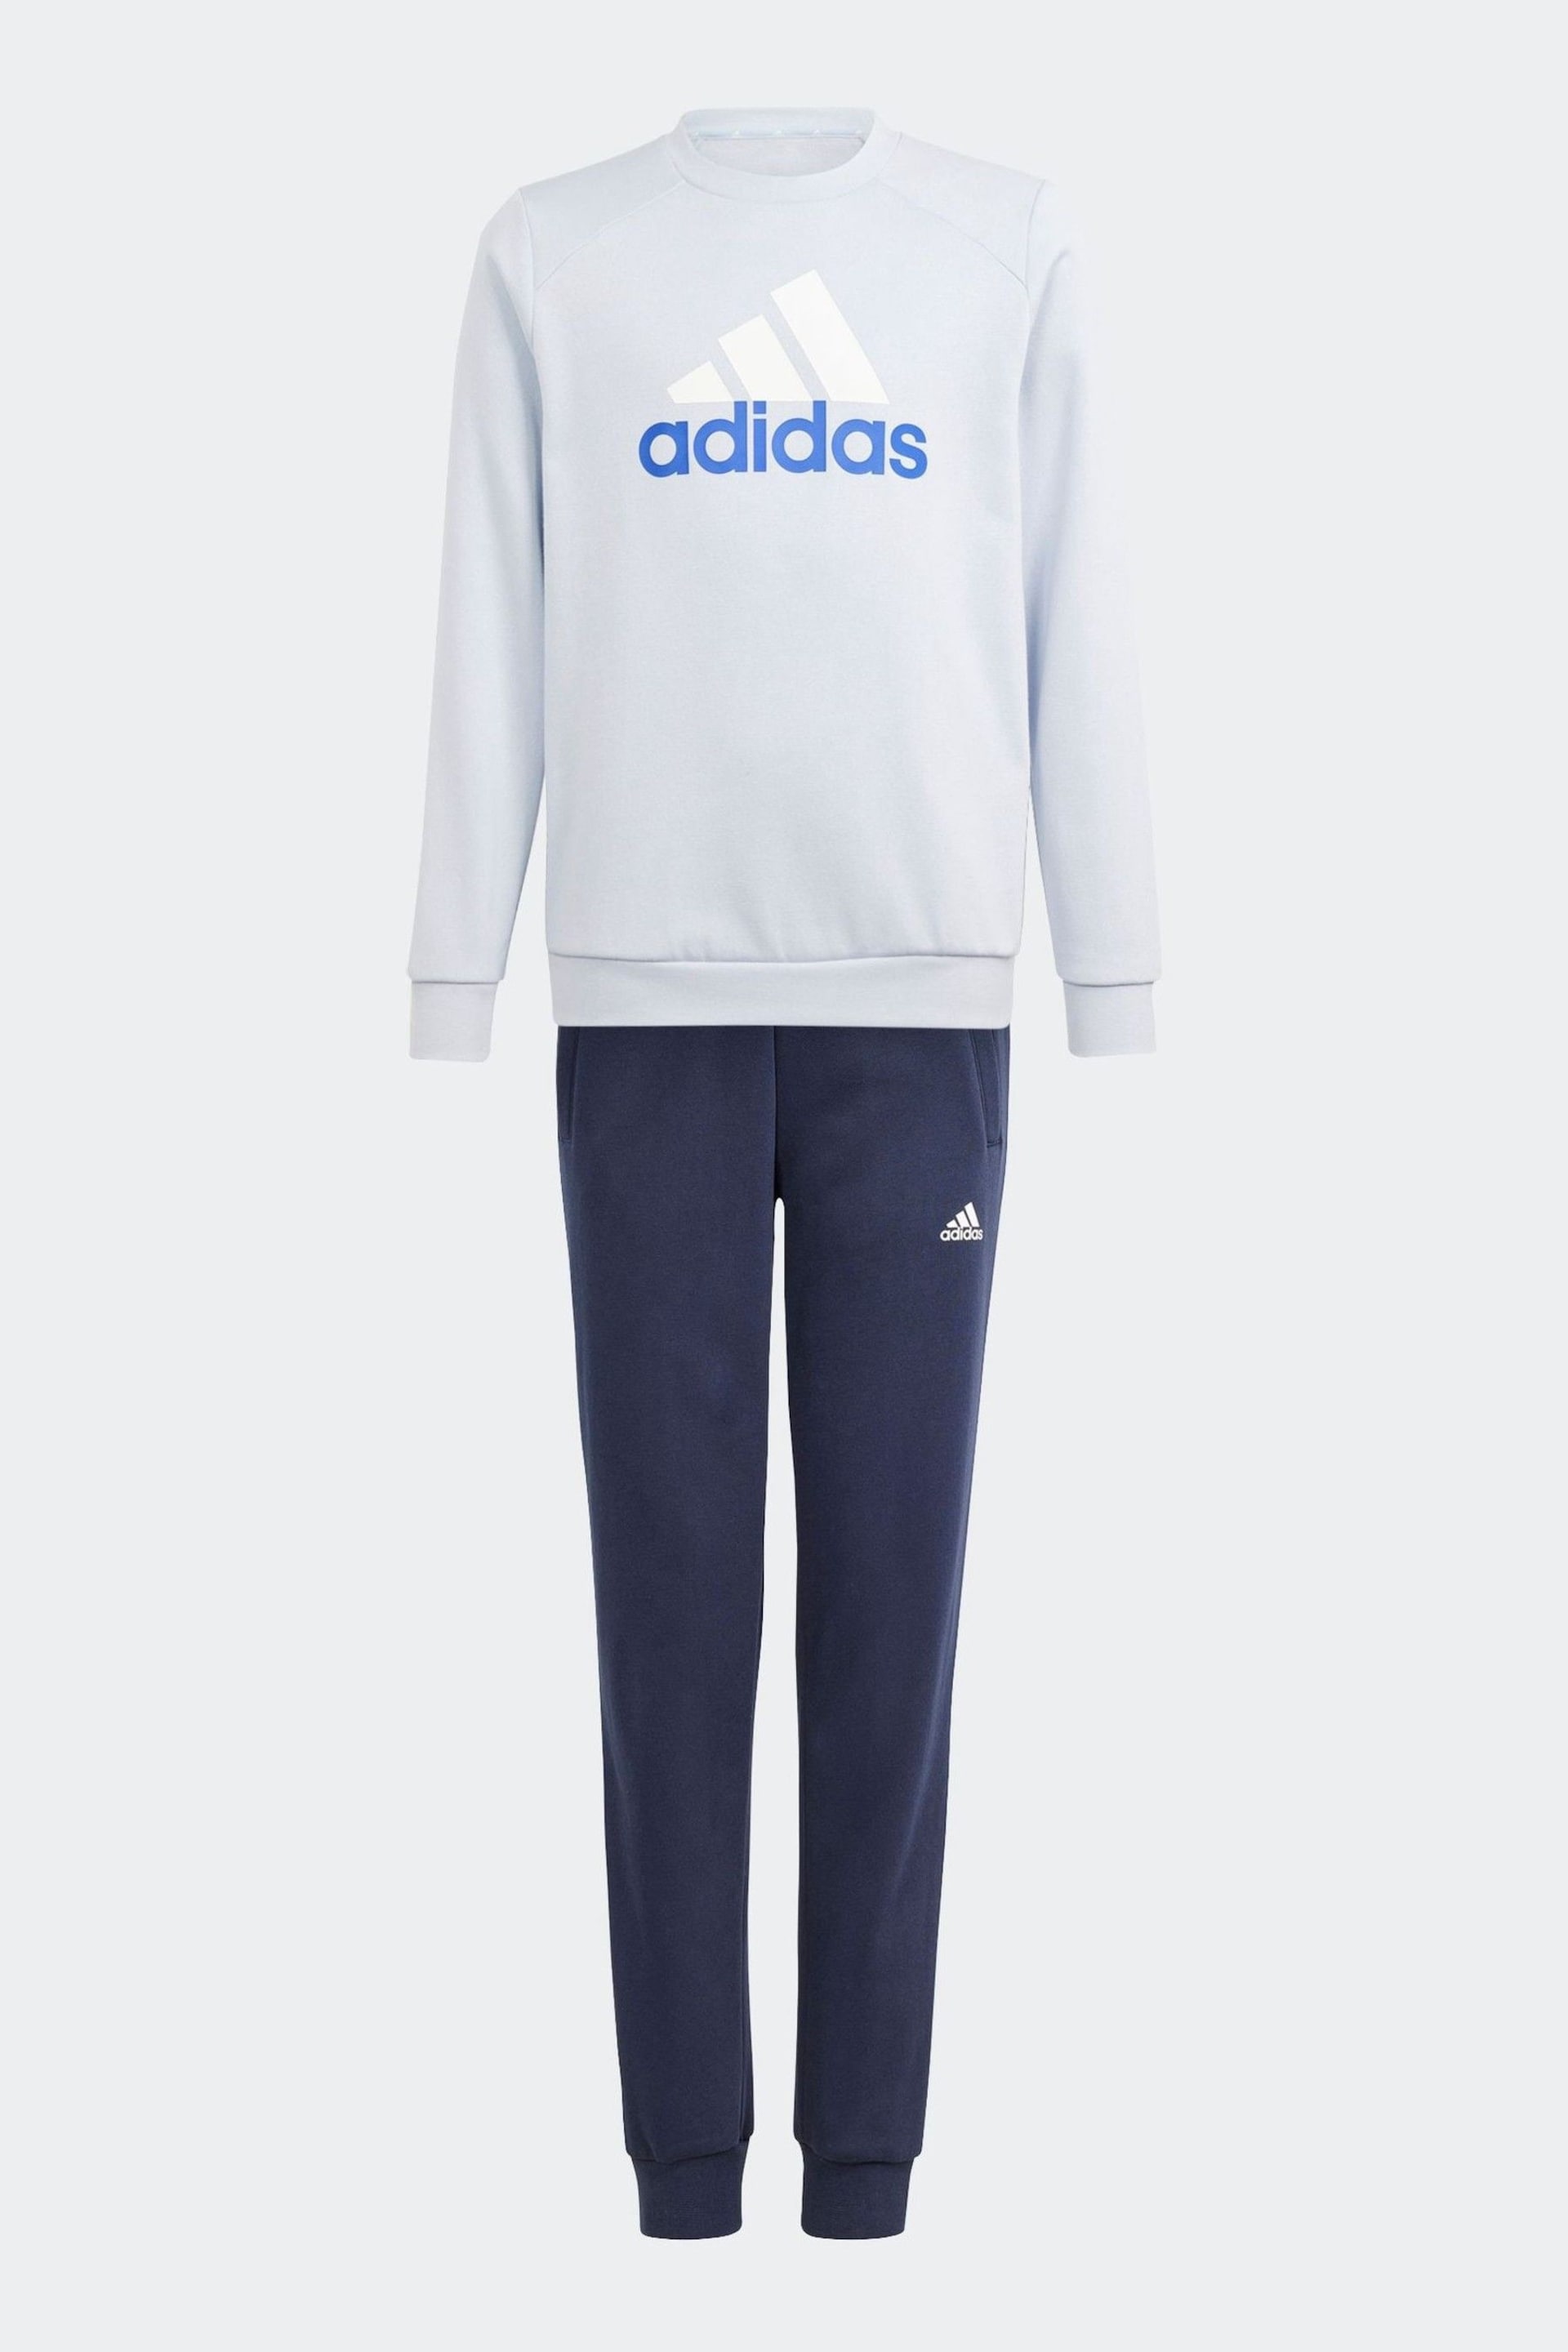 adidas Grey Kids Sportswear Essentials Big Logo Fleece Joggers Set - Image 1 of 6